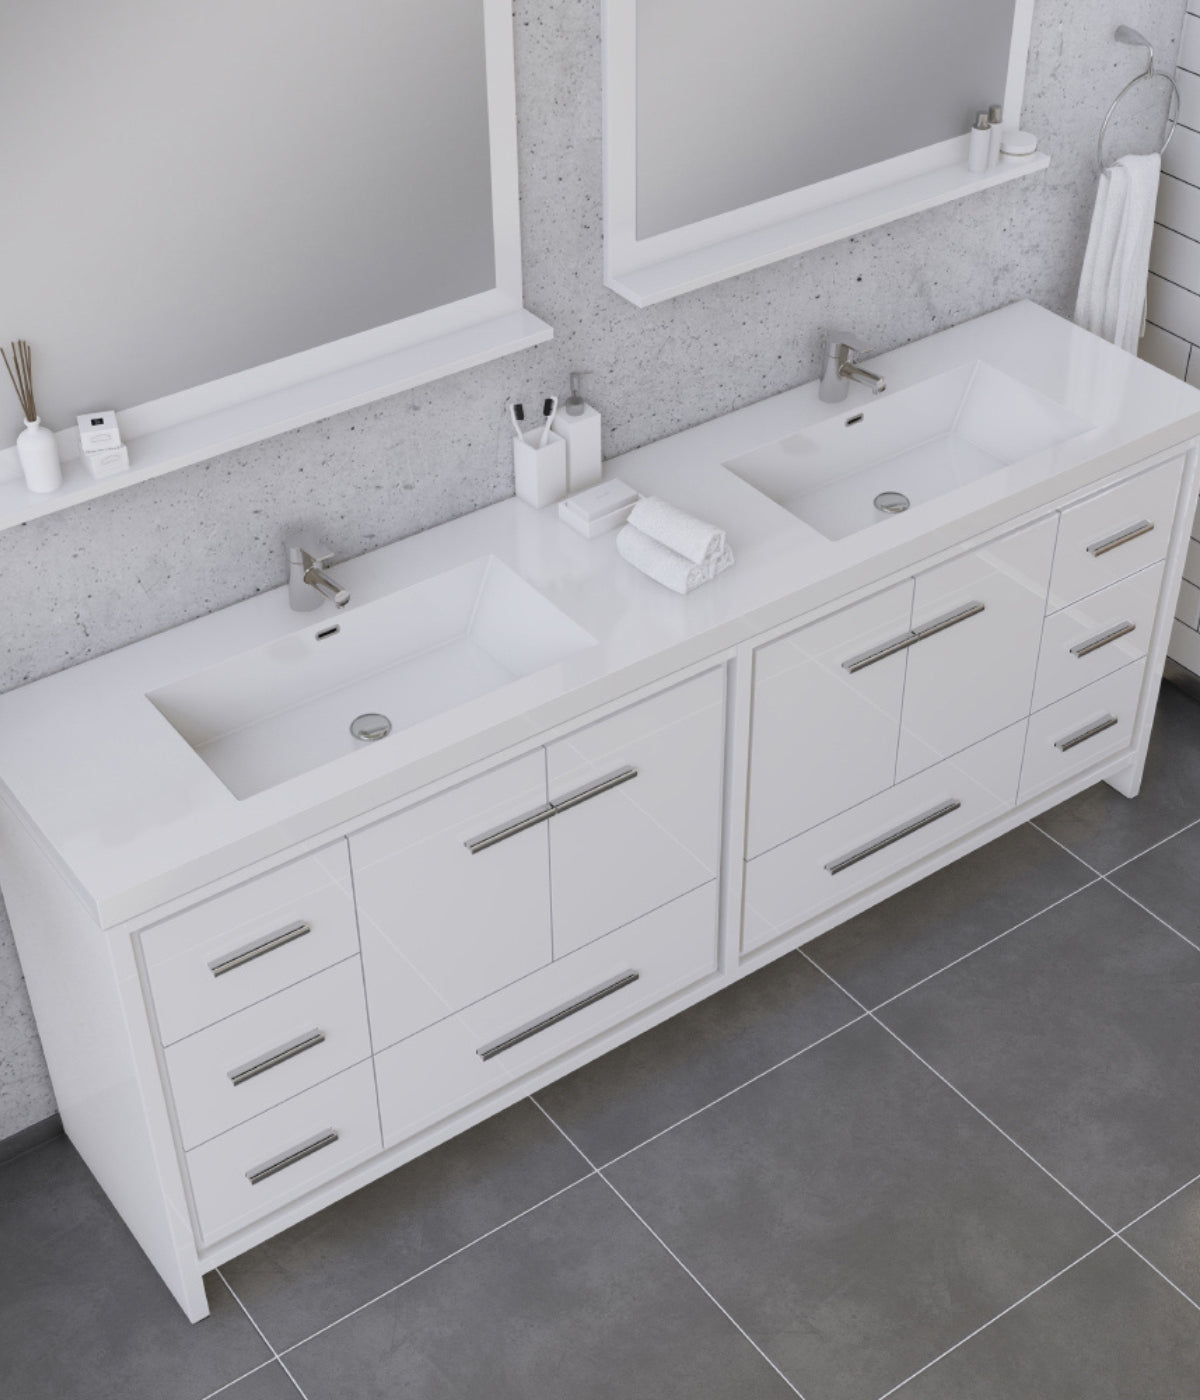 Sortino 84 inch bathroom wood vanity is the premier All Wood vanity for your next bathroom remodel